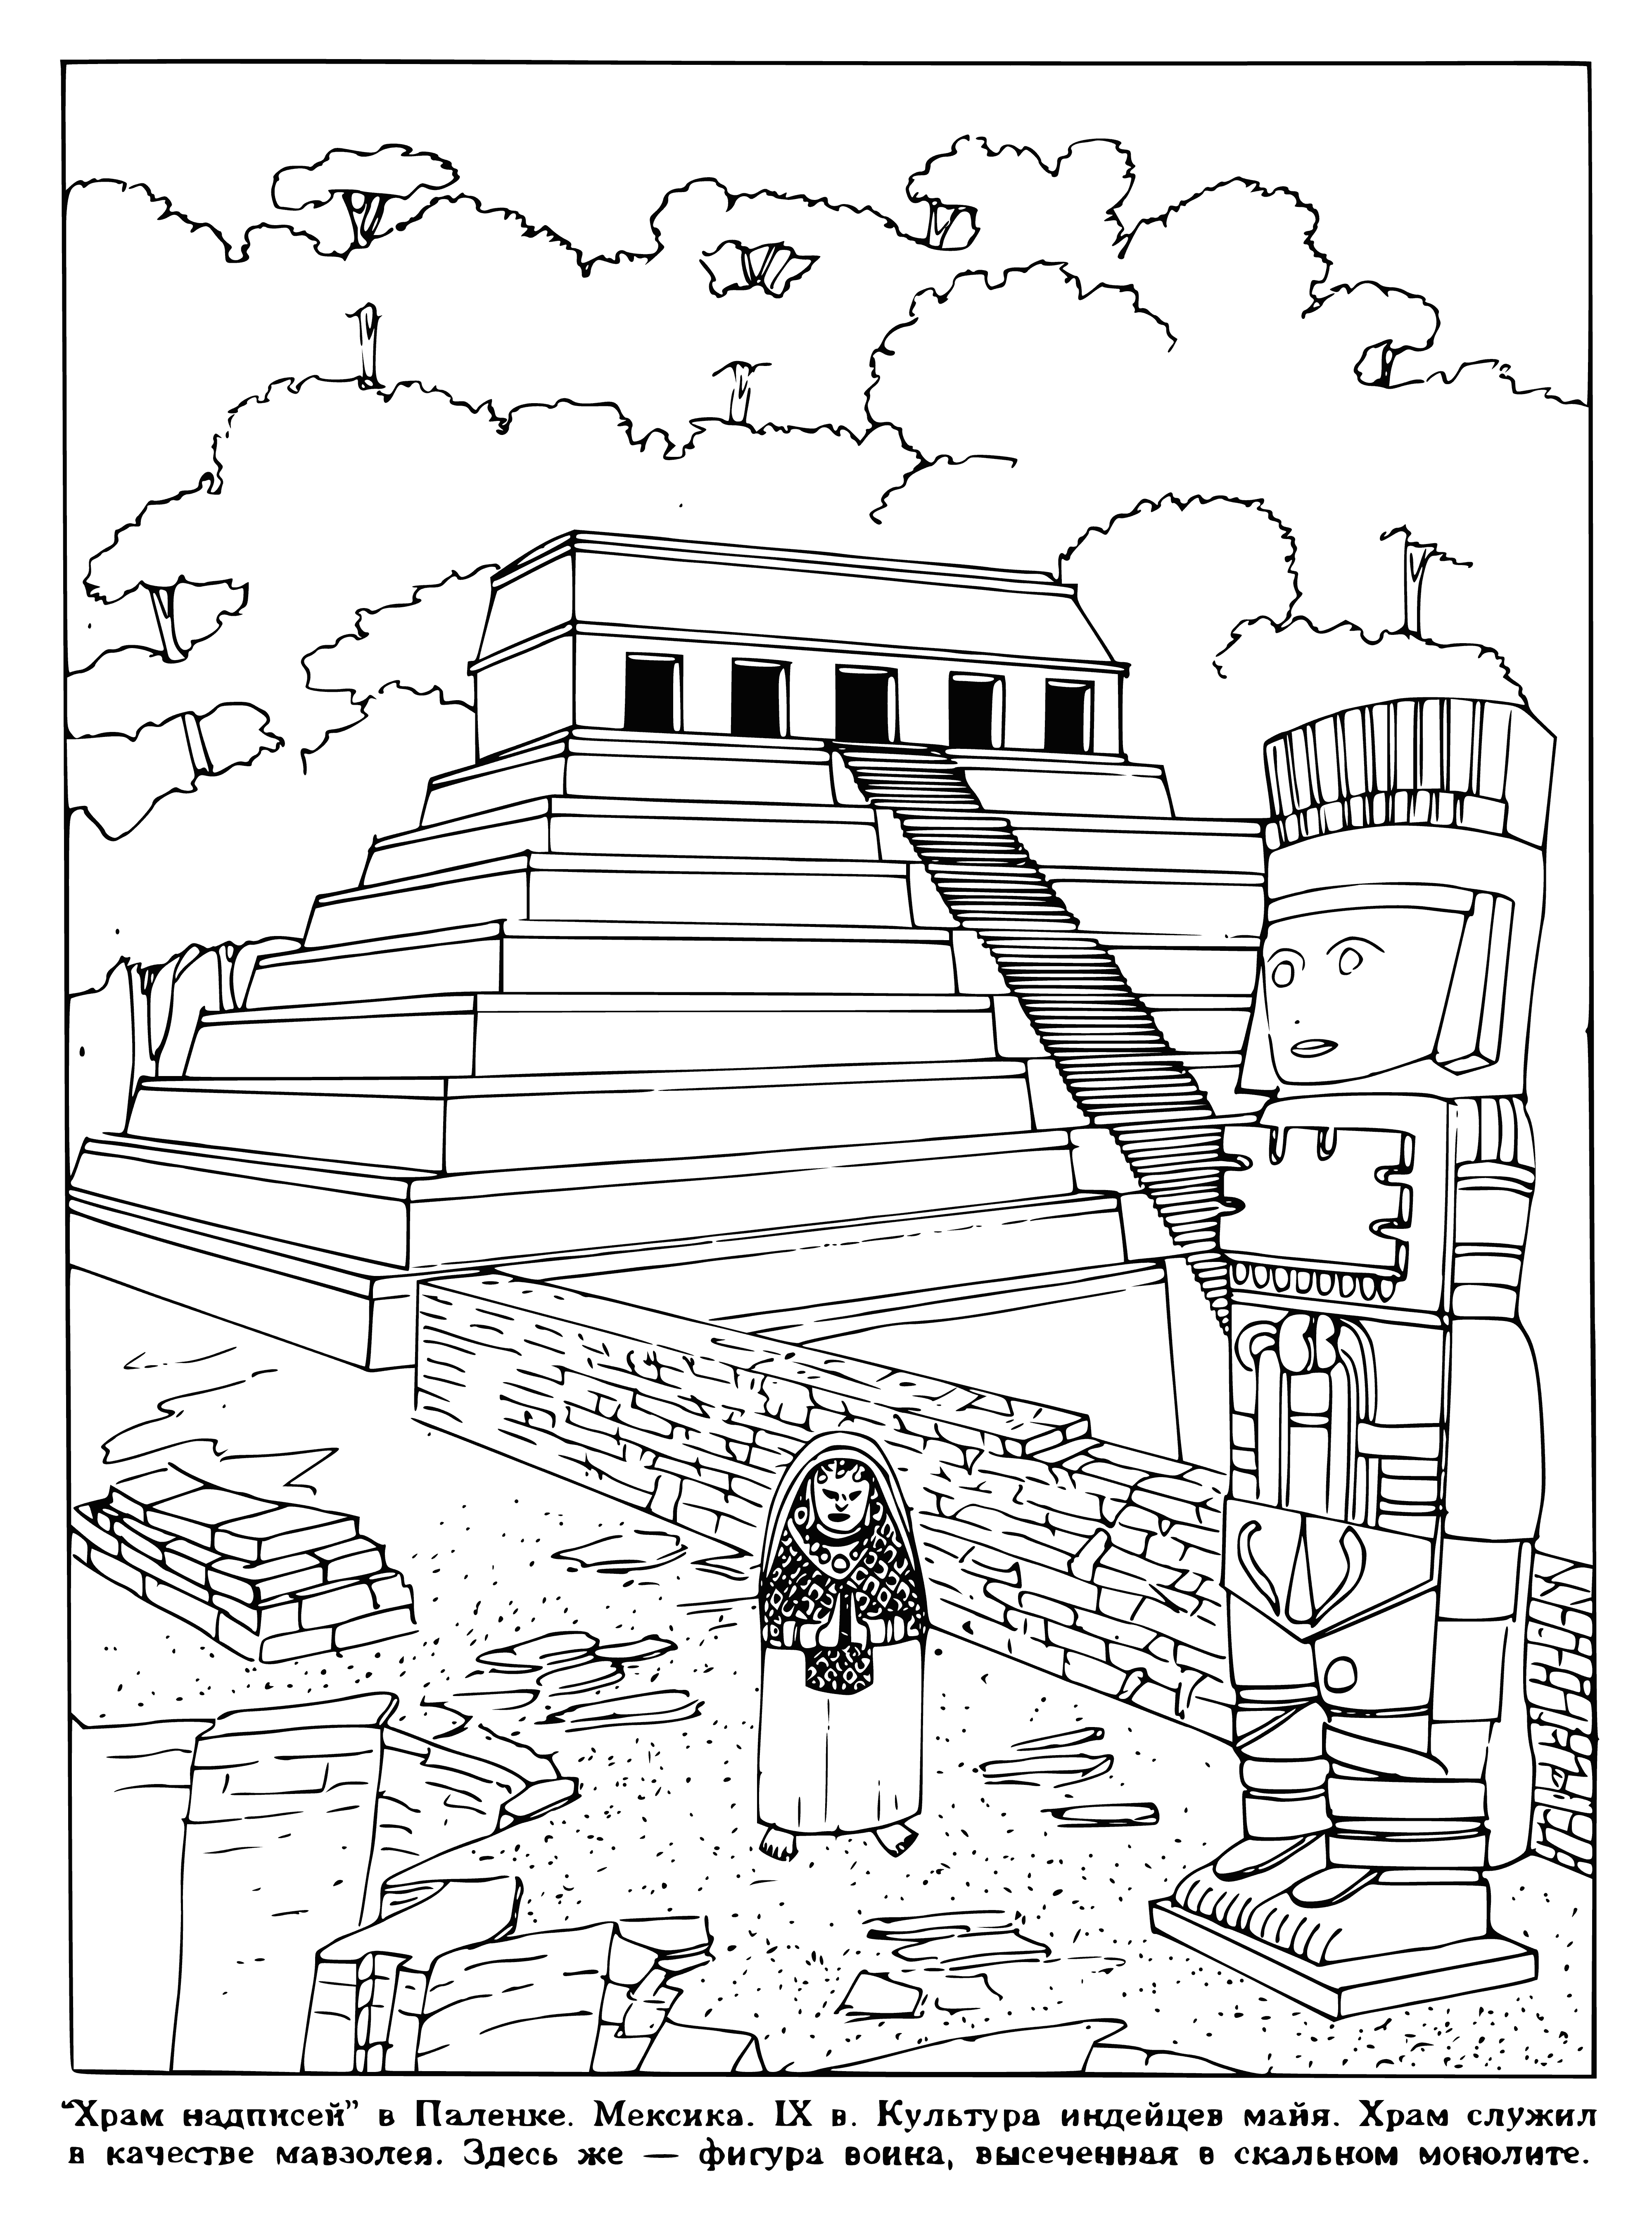 Tempel in Mexiko Malseite